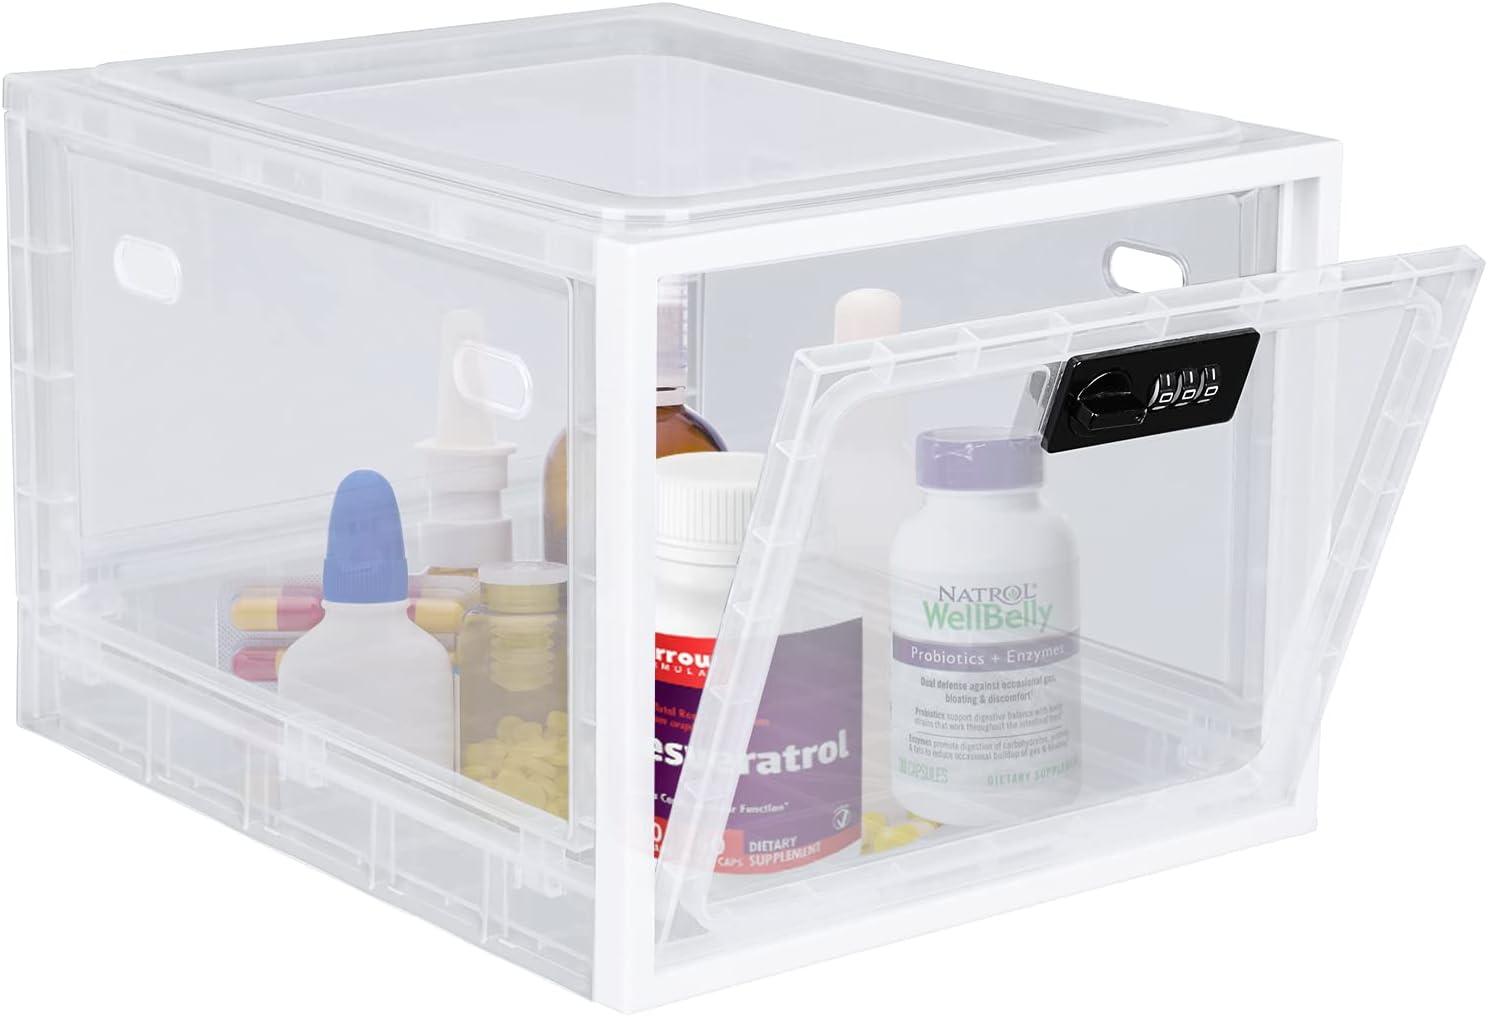 Lockable Medicine Box, Medicine Storage Box, Premium Material - Massive Discounts